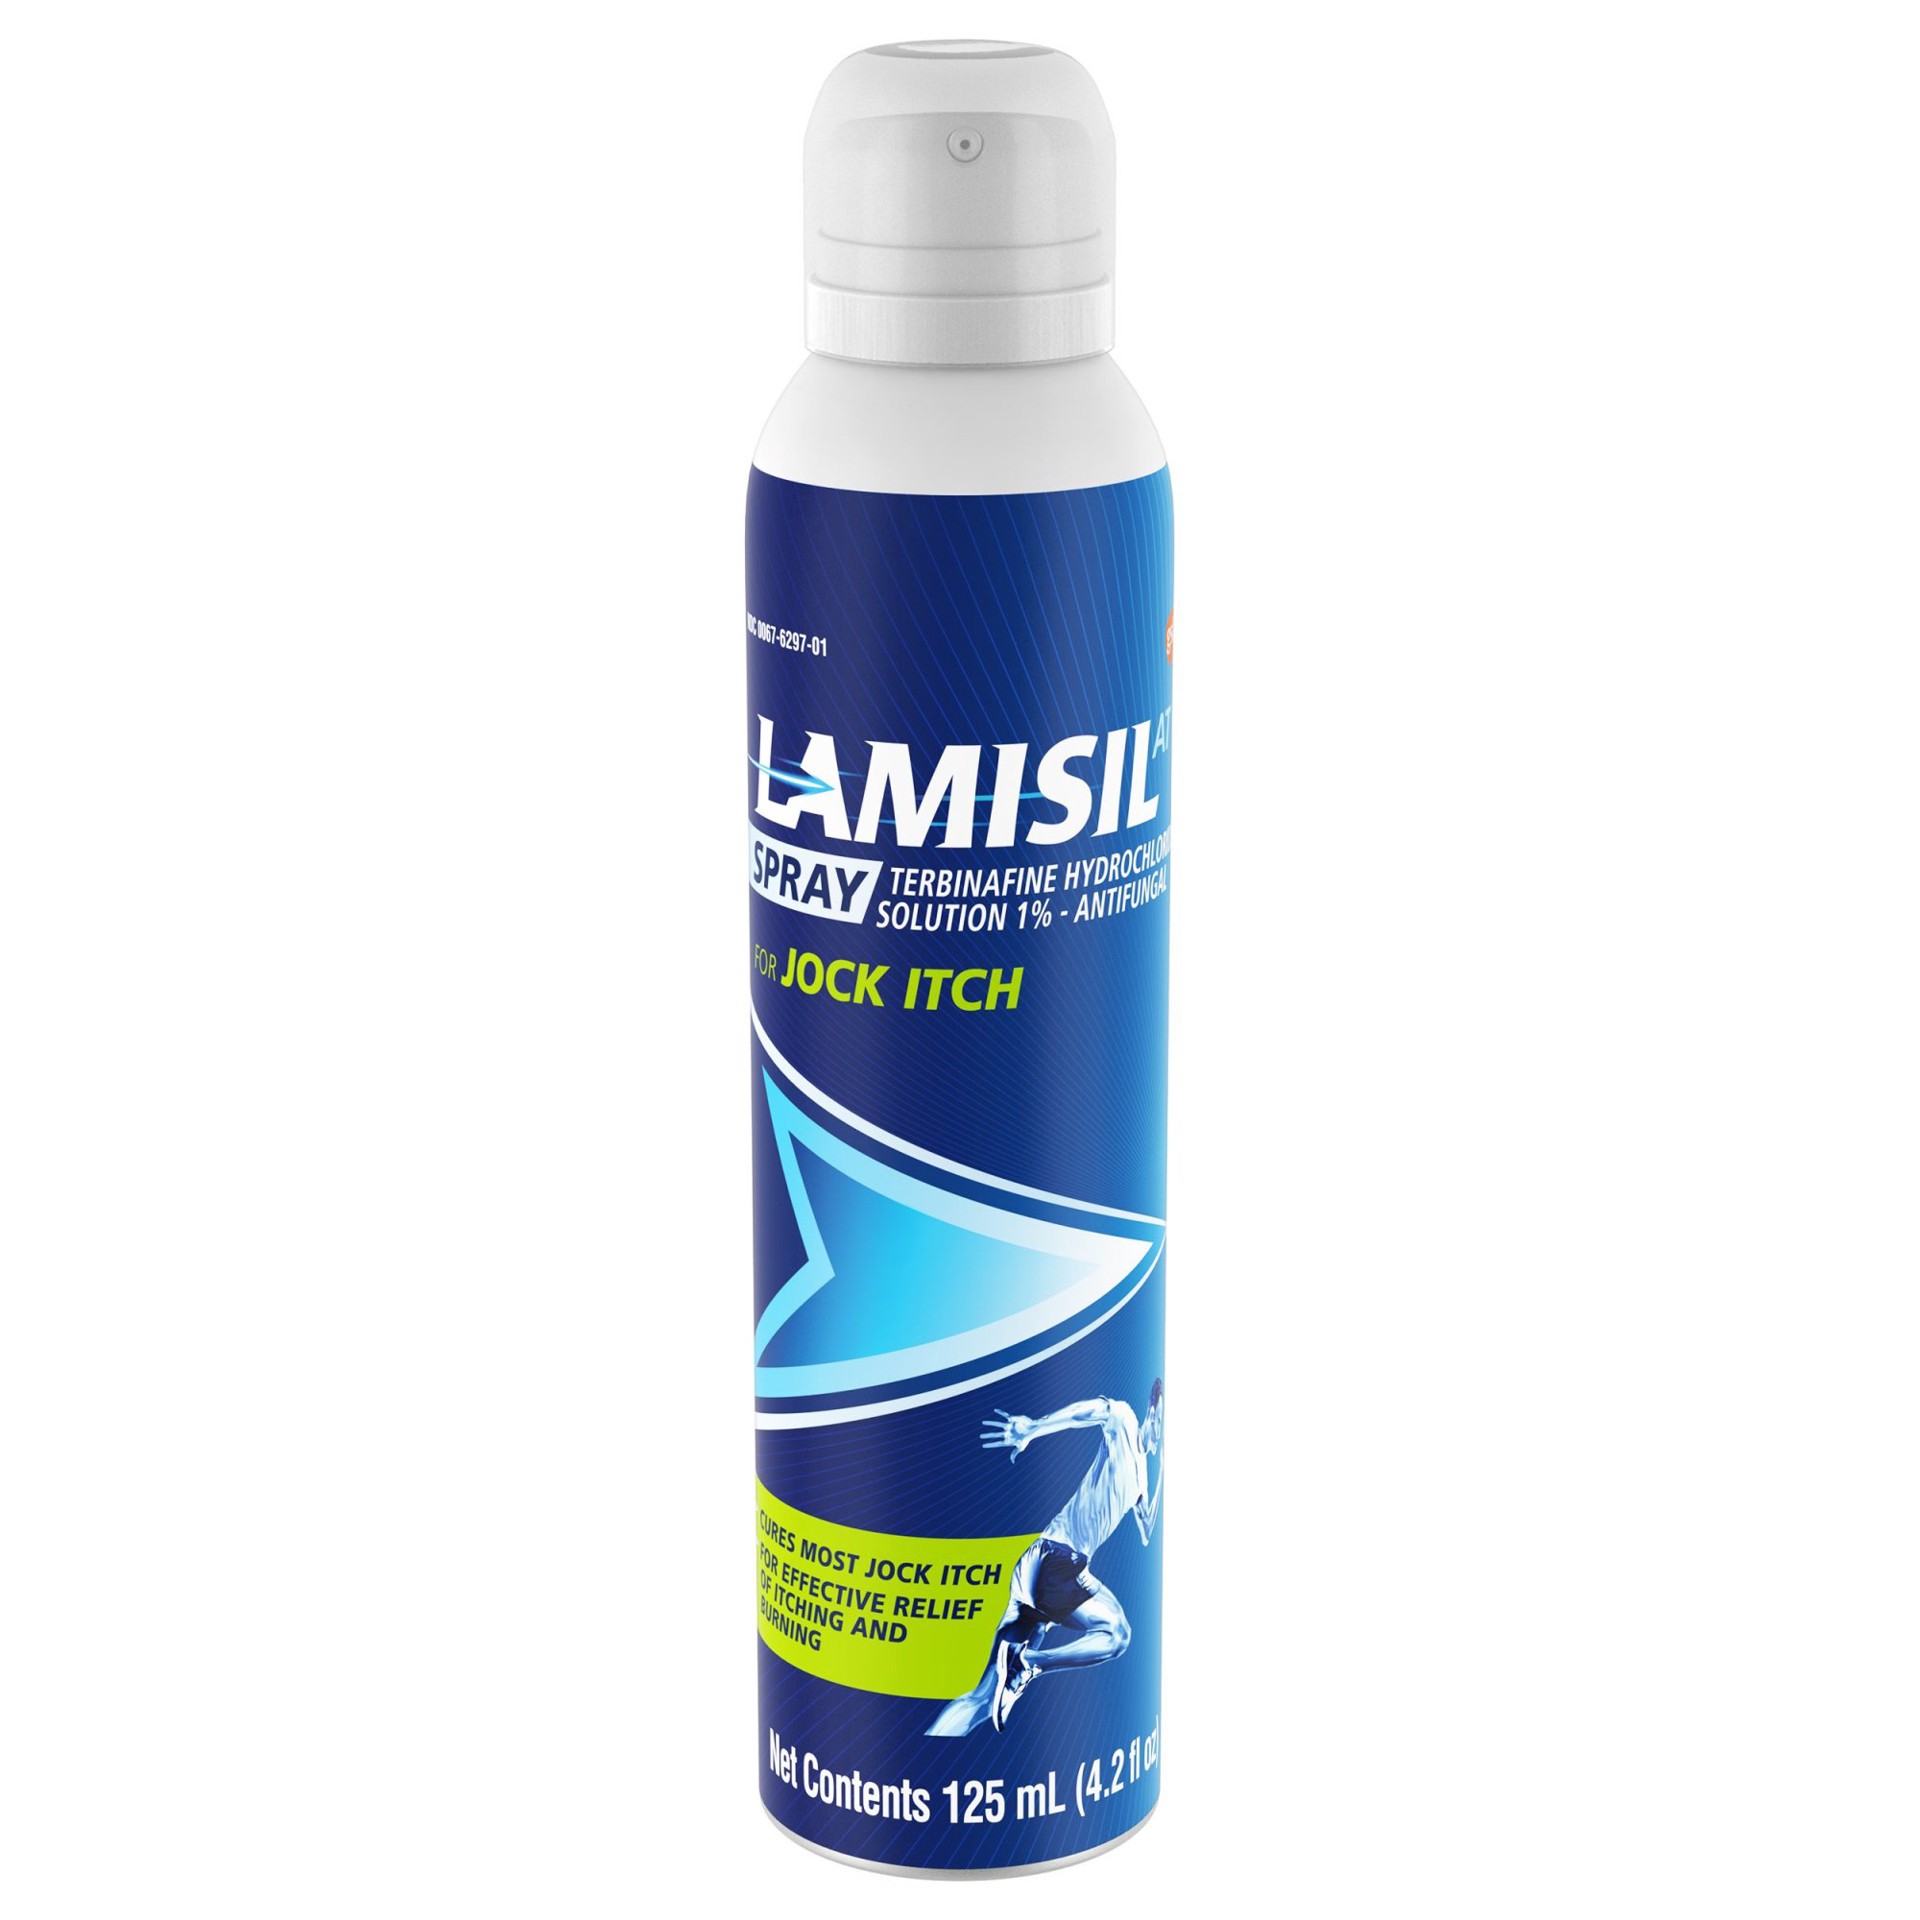 slide 1 of 3, Lamisil AT Lamisil Jock Itch Spray, 4.2 fl oz